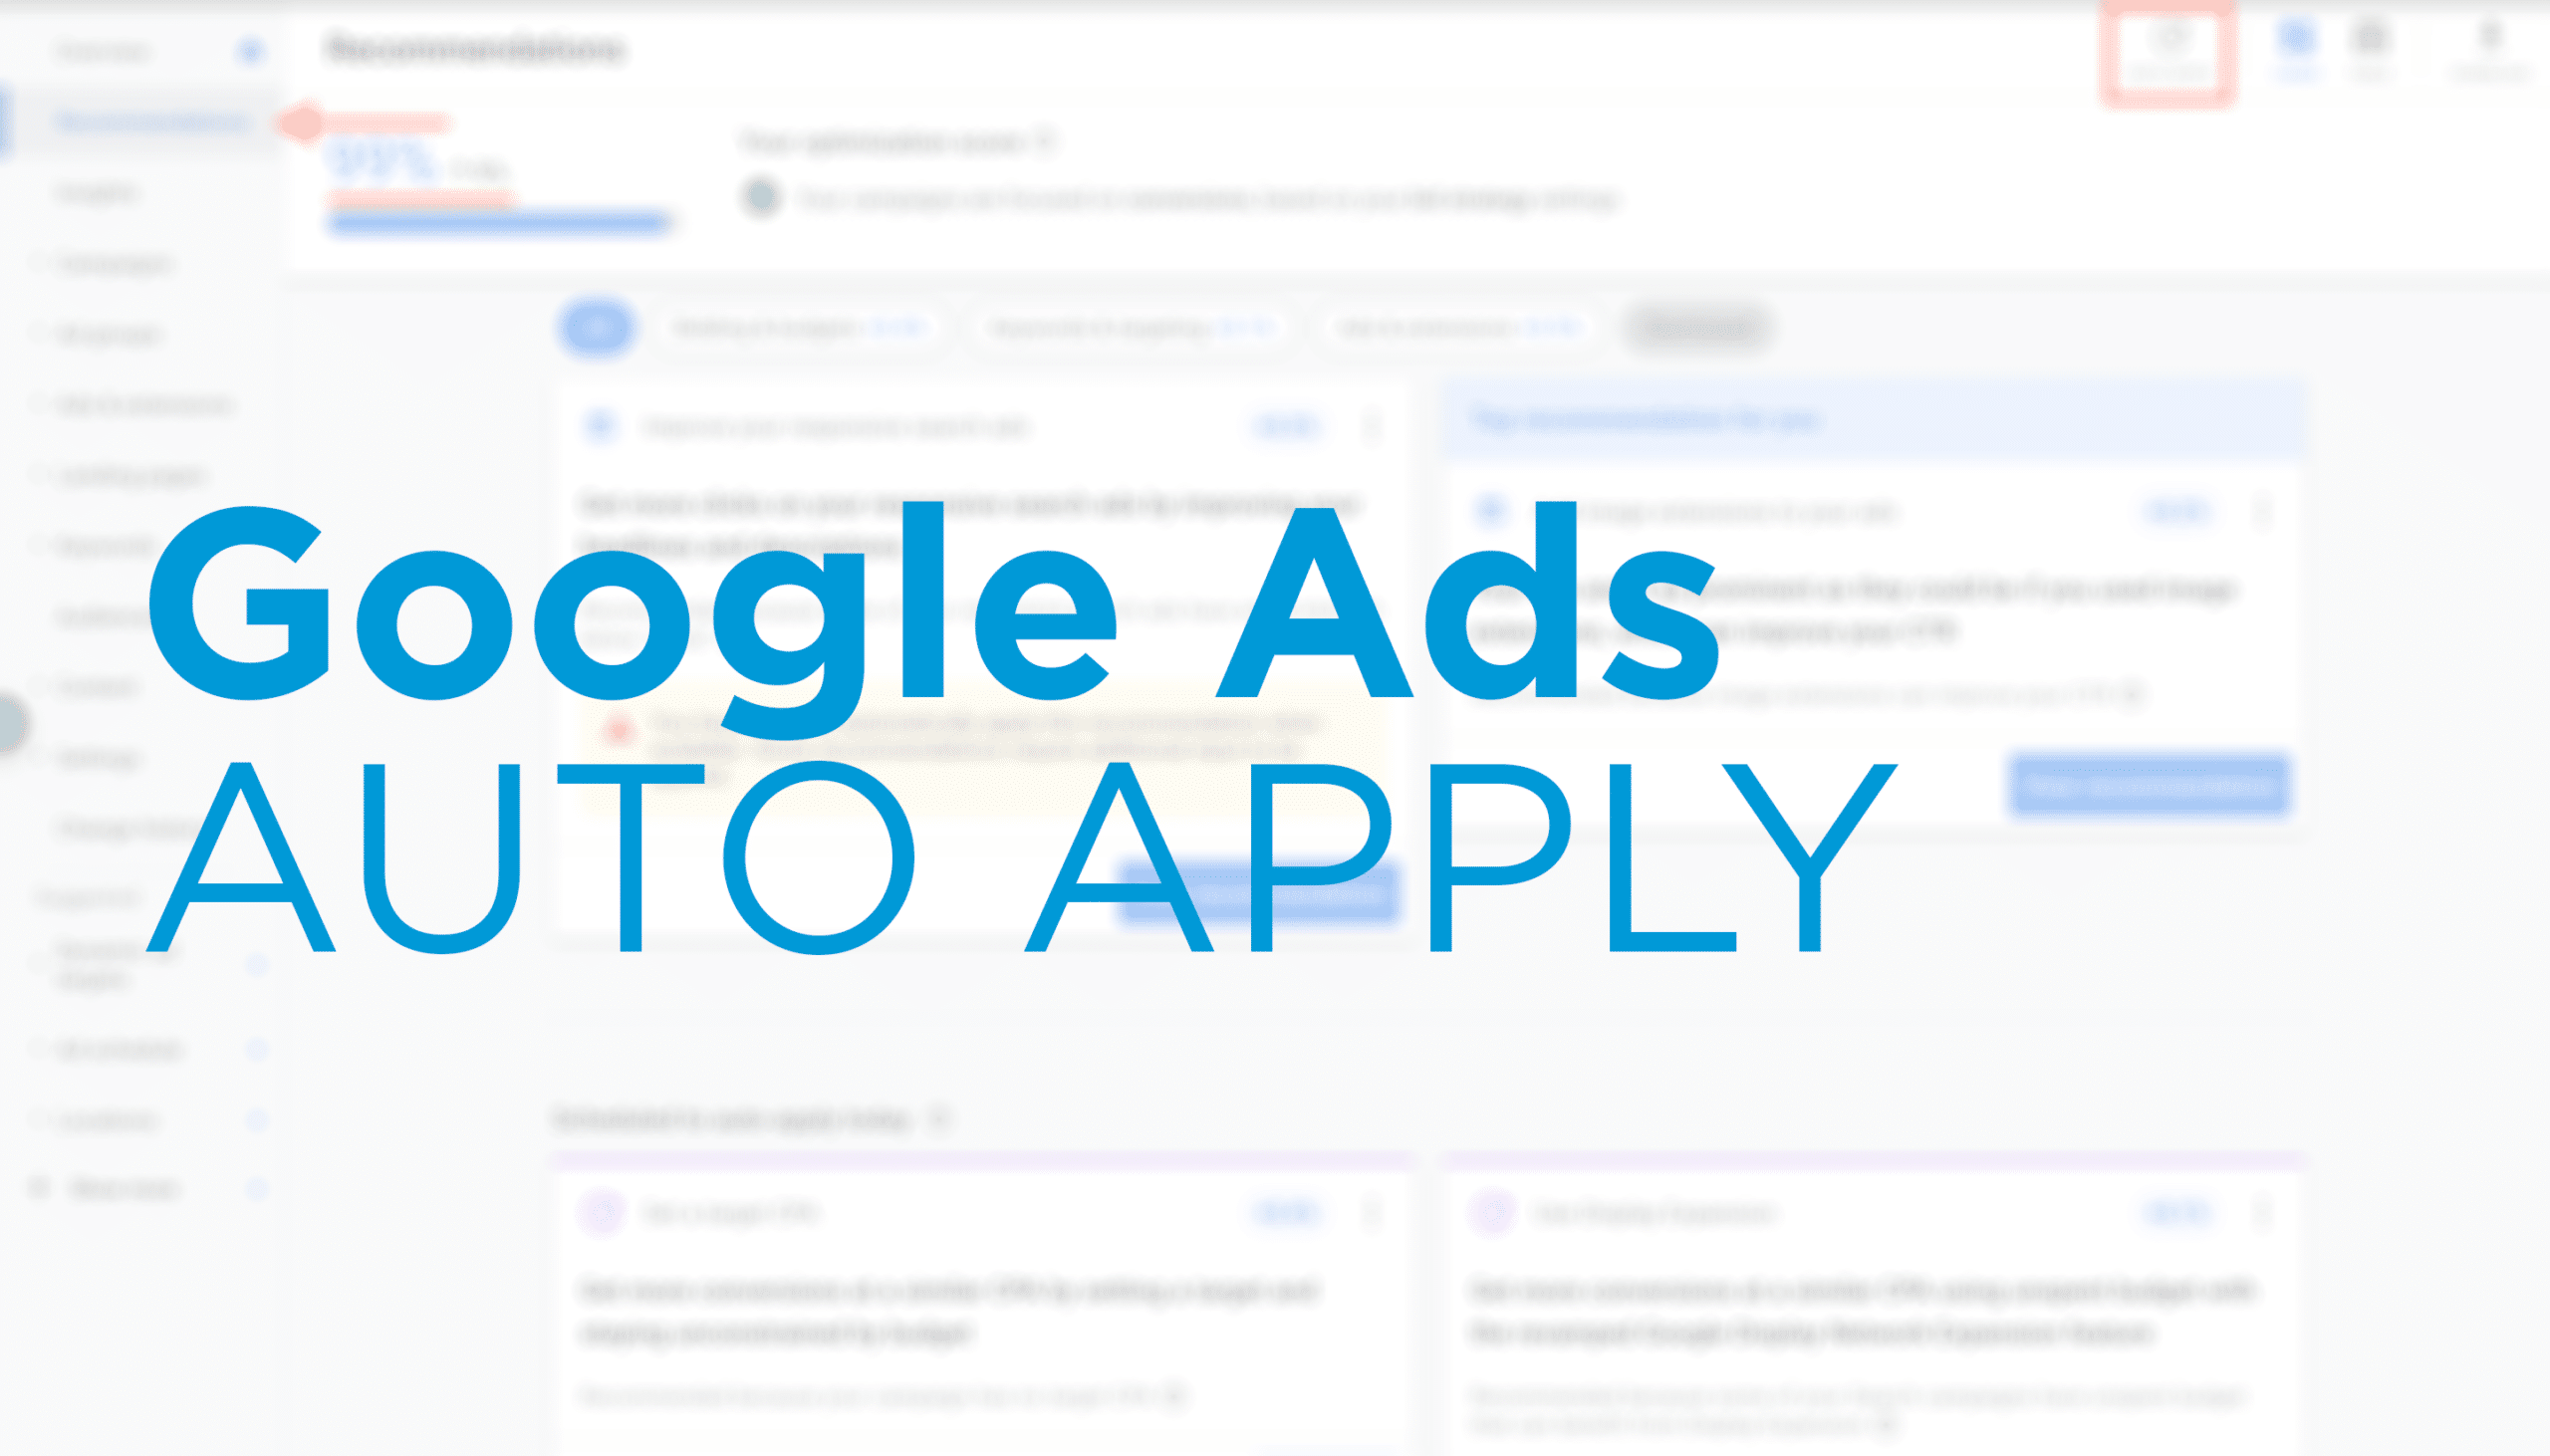 lianudom-phuket-digital-agency-auto-apply-google-ads-auto-apply-feature-image